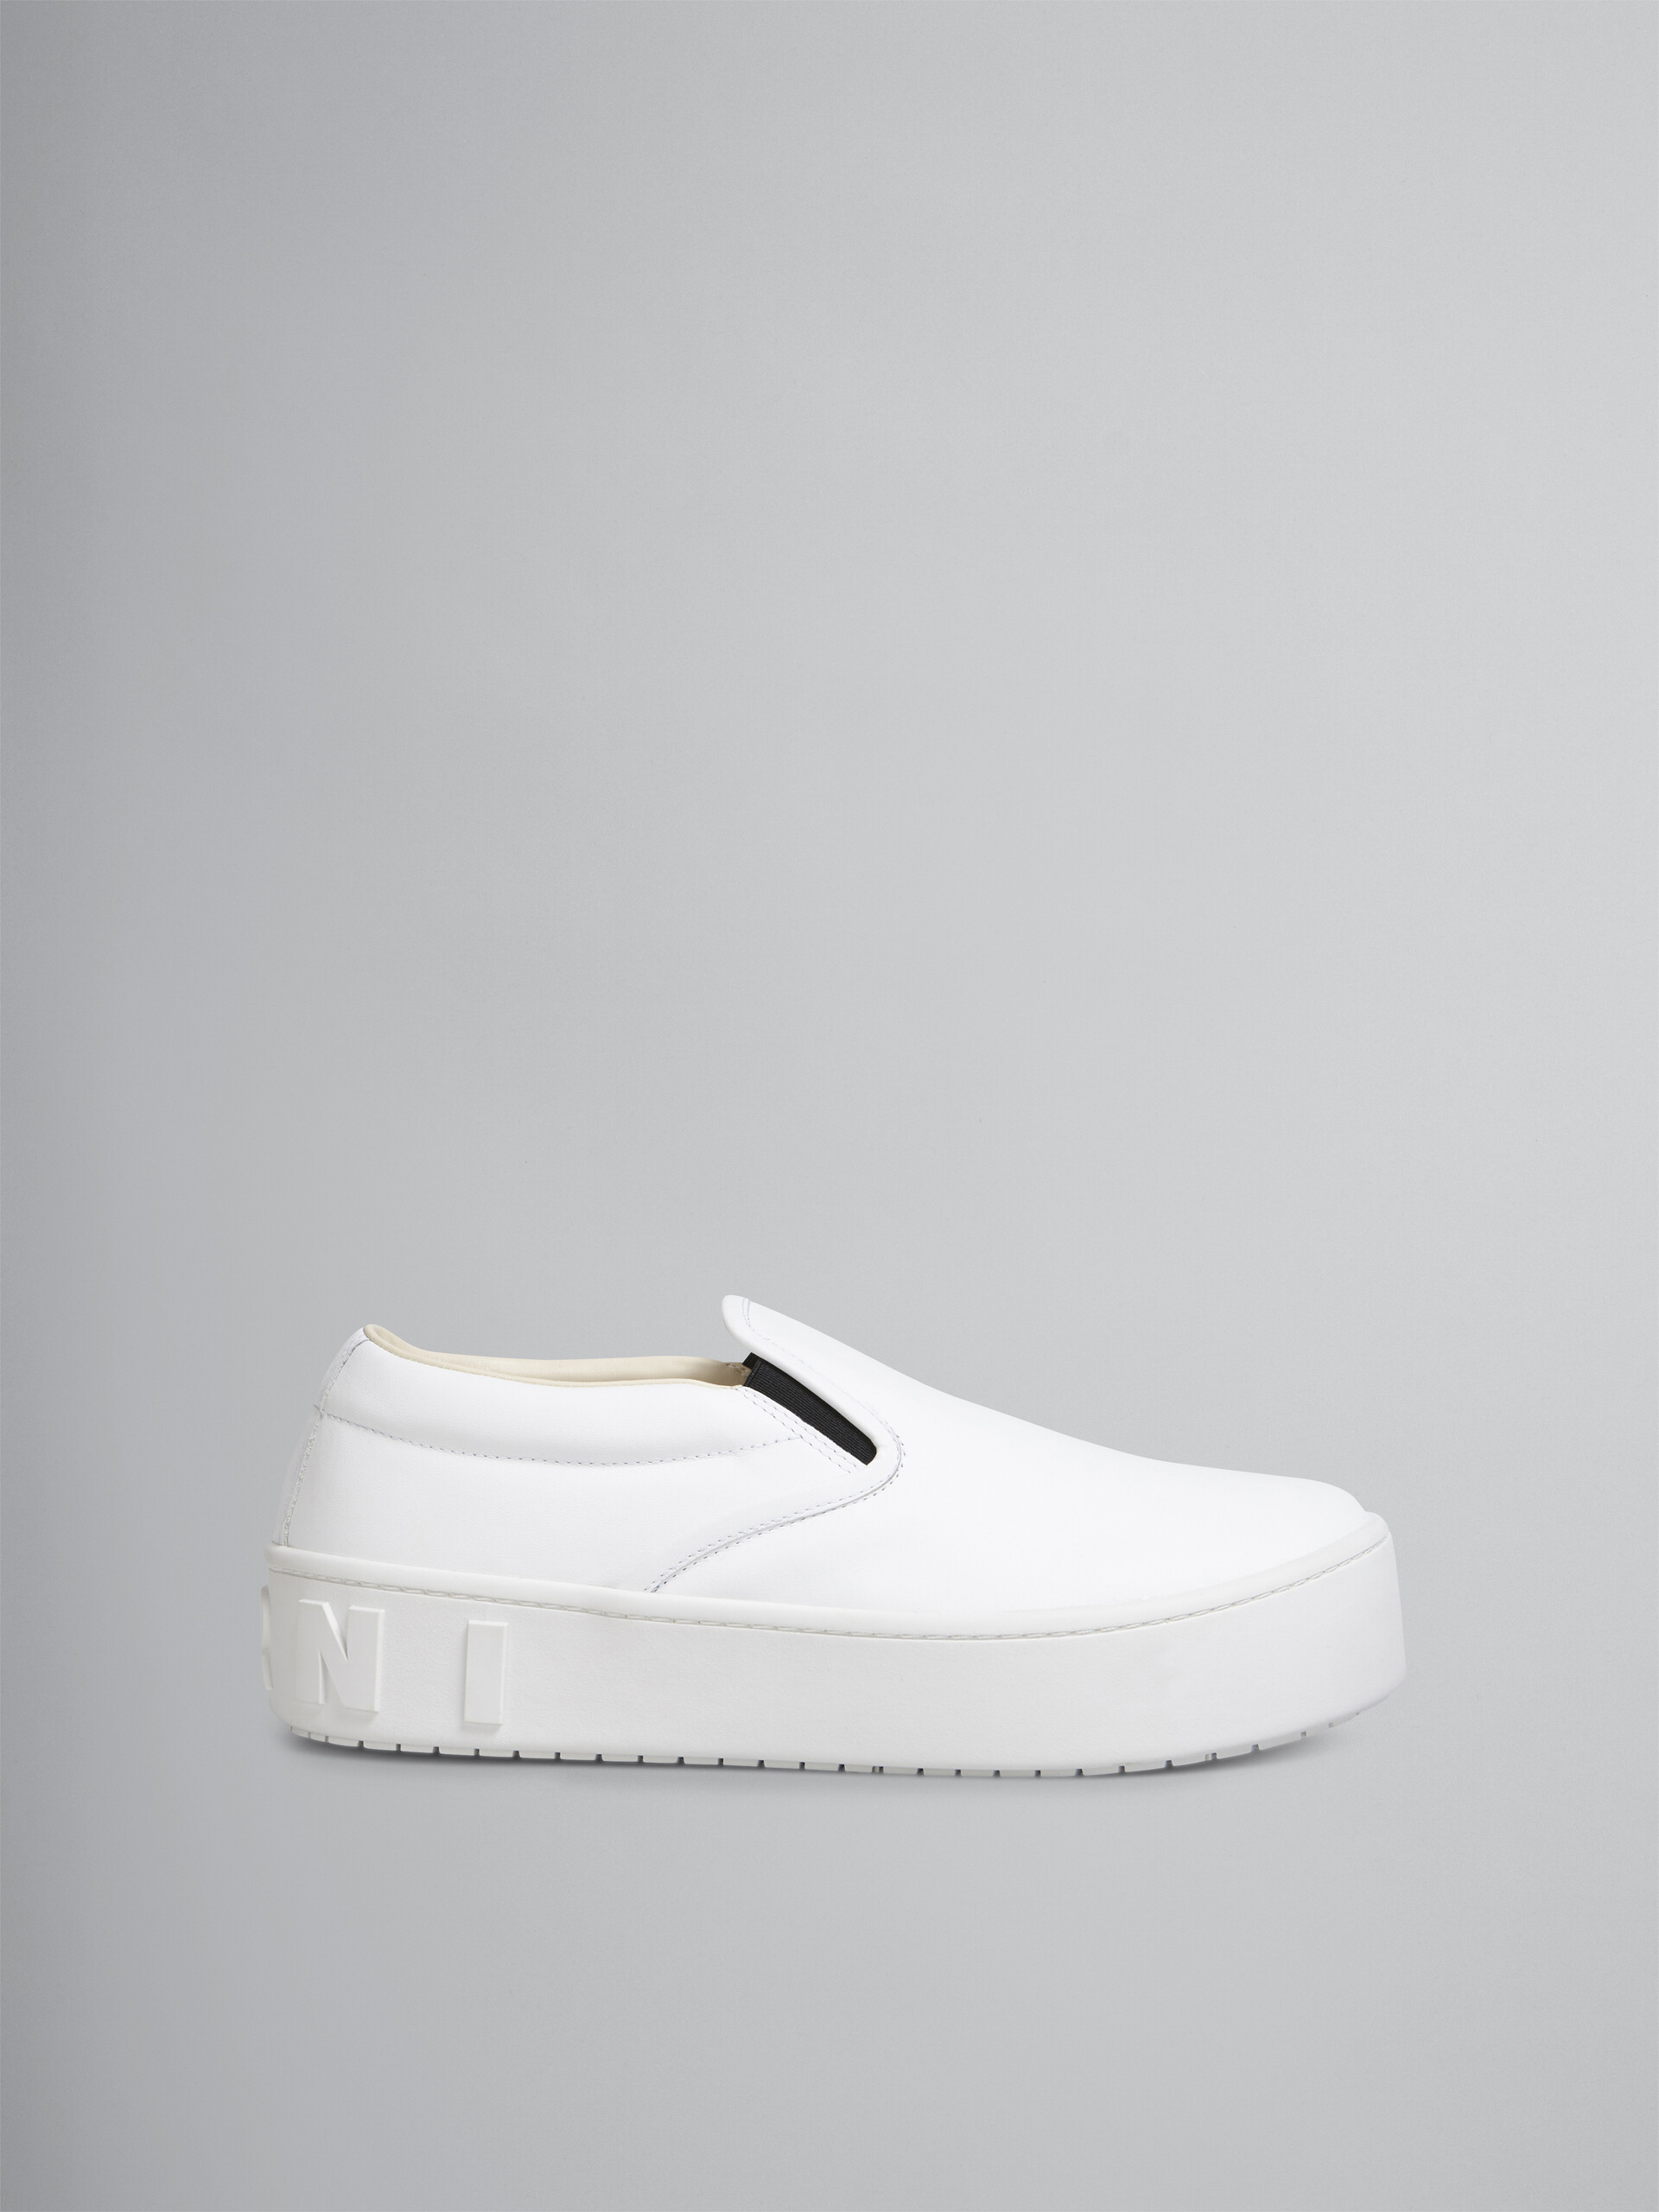 White calfskin slip-on sneaker with raised maxi Marni logo - Sneakers - Image 1